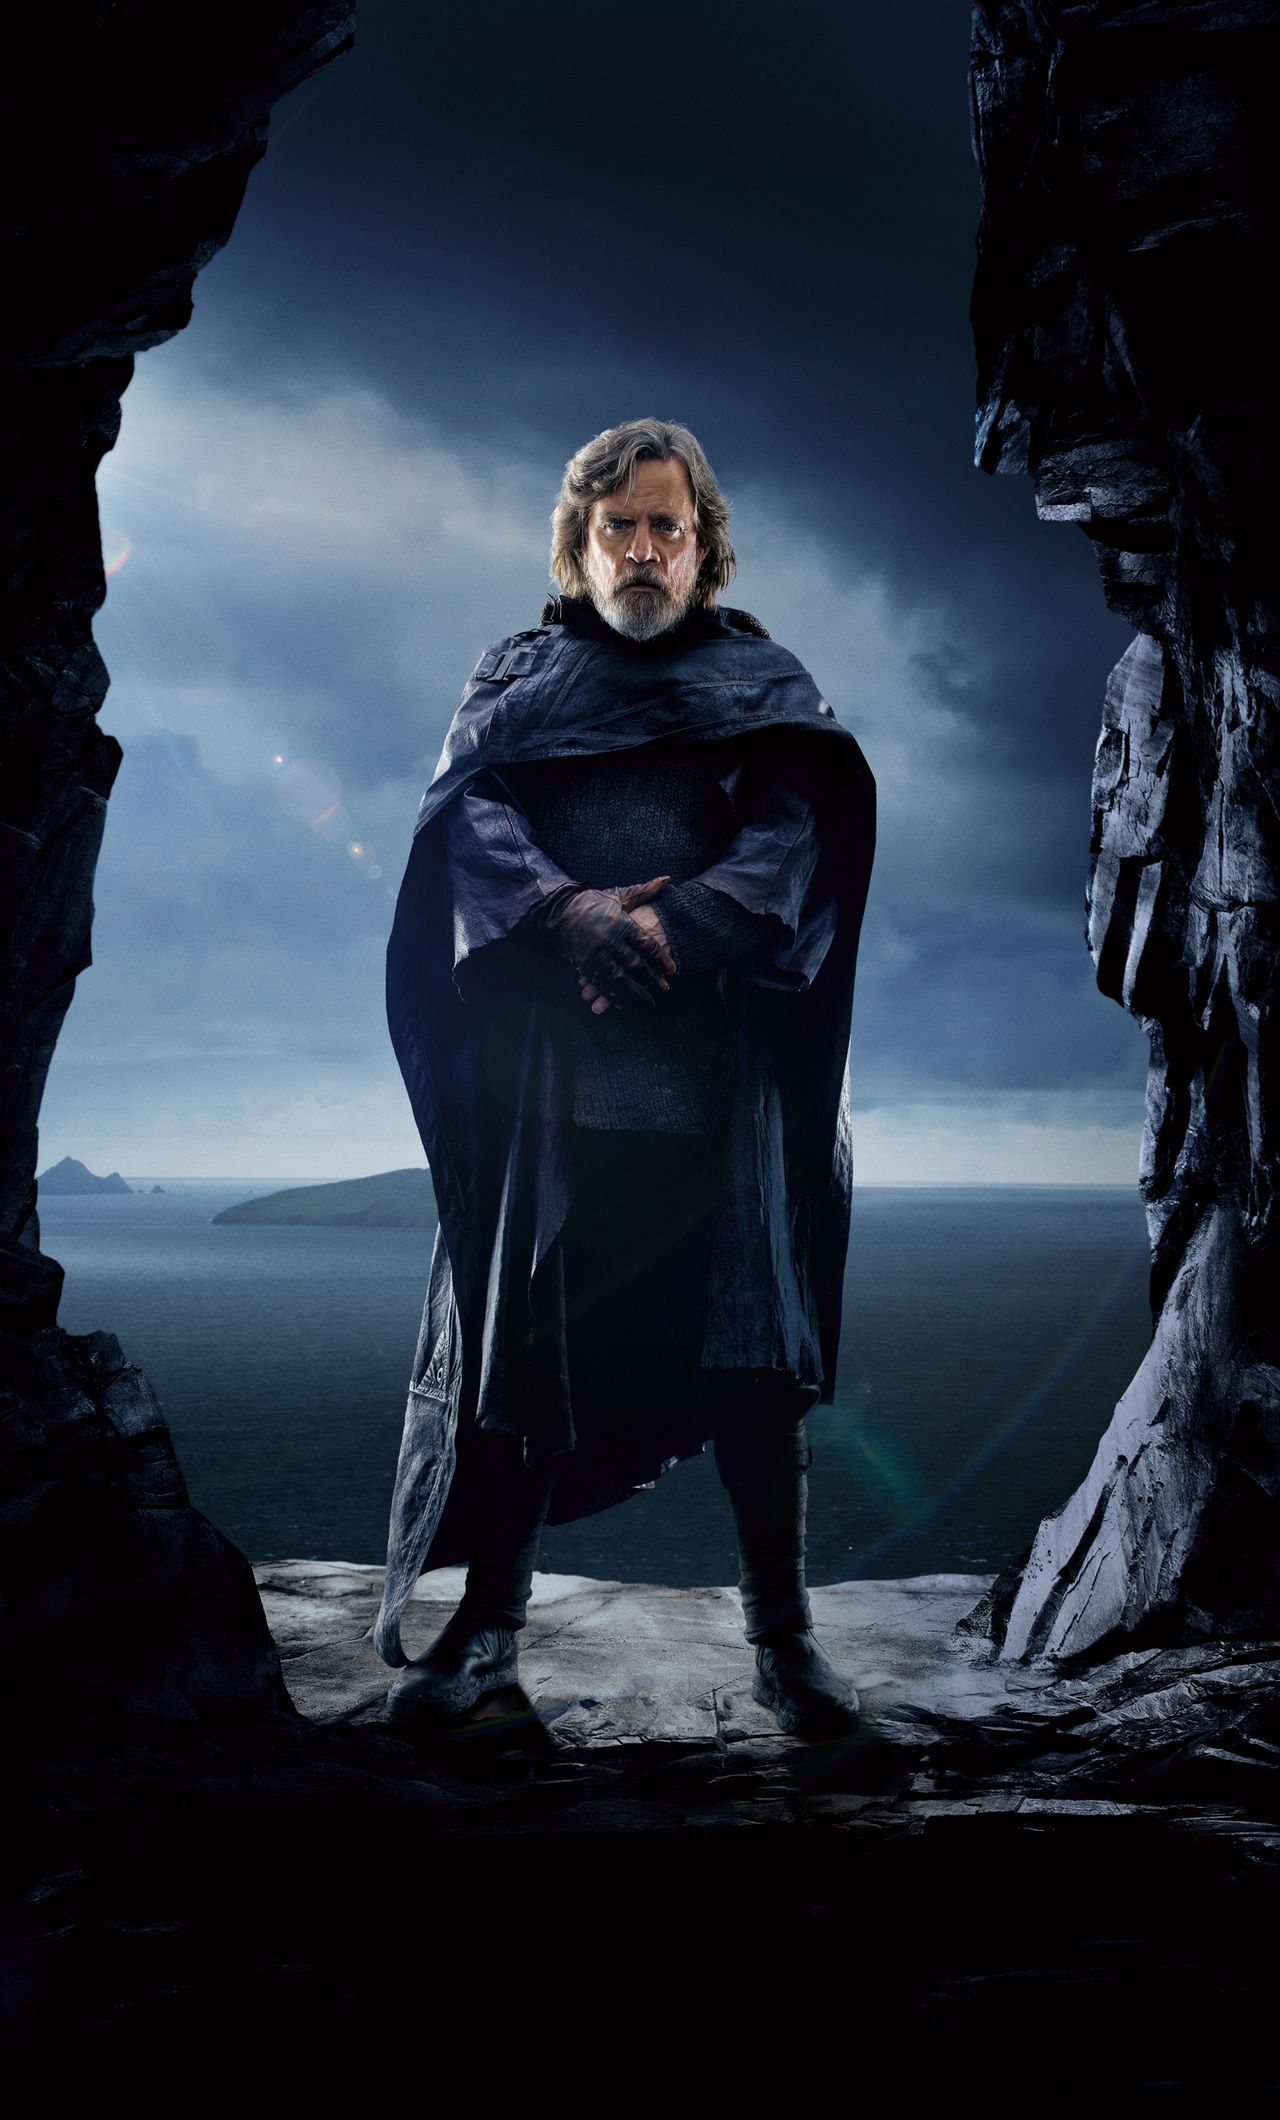 Luke Skywalker Star Wars The Last Jedi 5k 2017 iPhone HD 4k Wallpaper, Image, Background, Photo and Picture